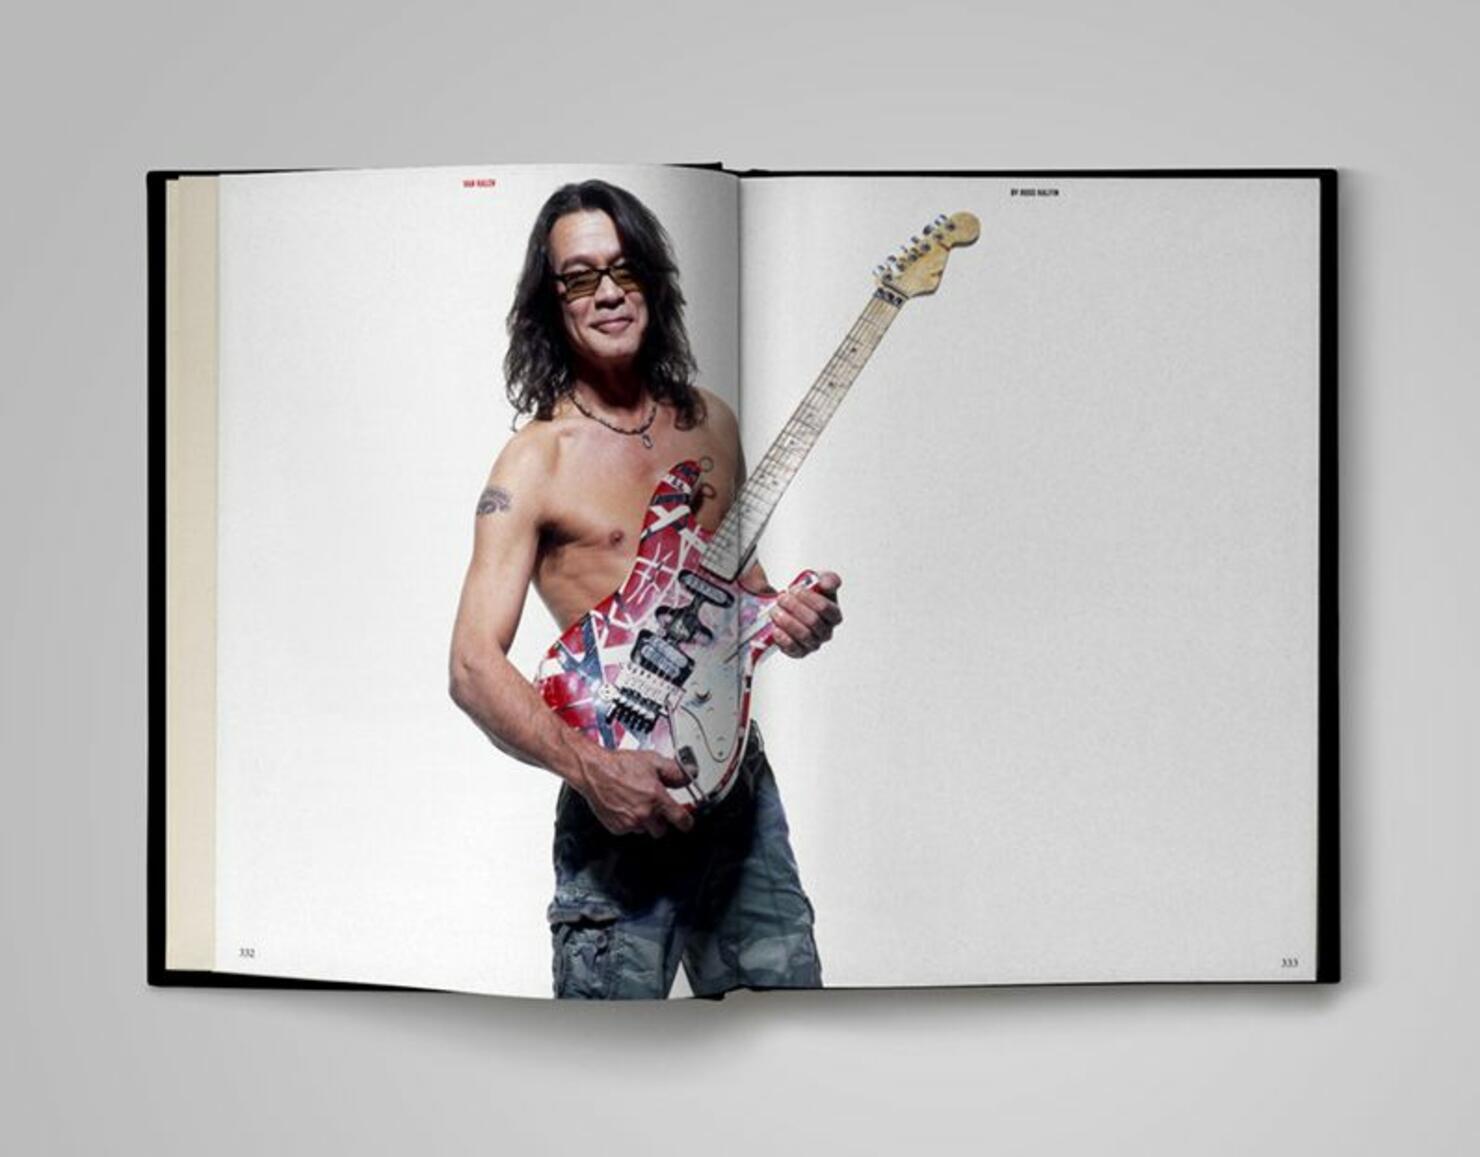 Edward Van Halen　by Ross Halfin